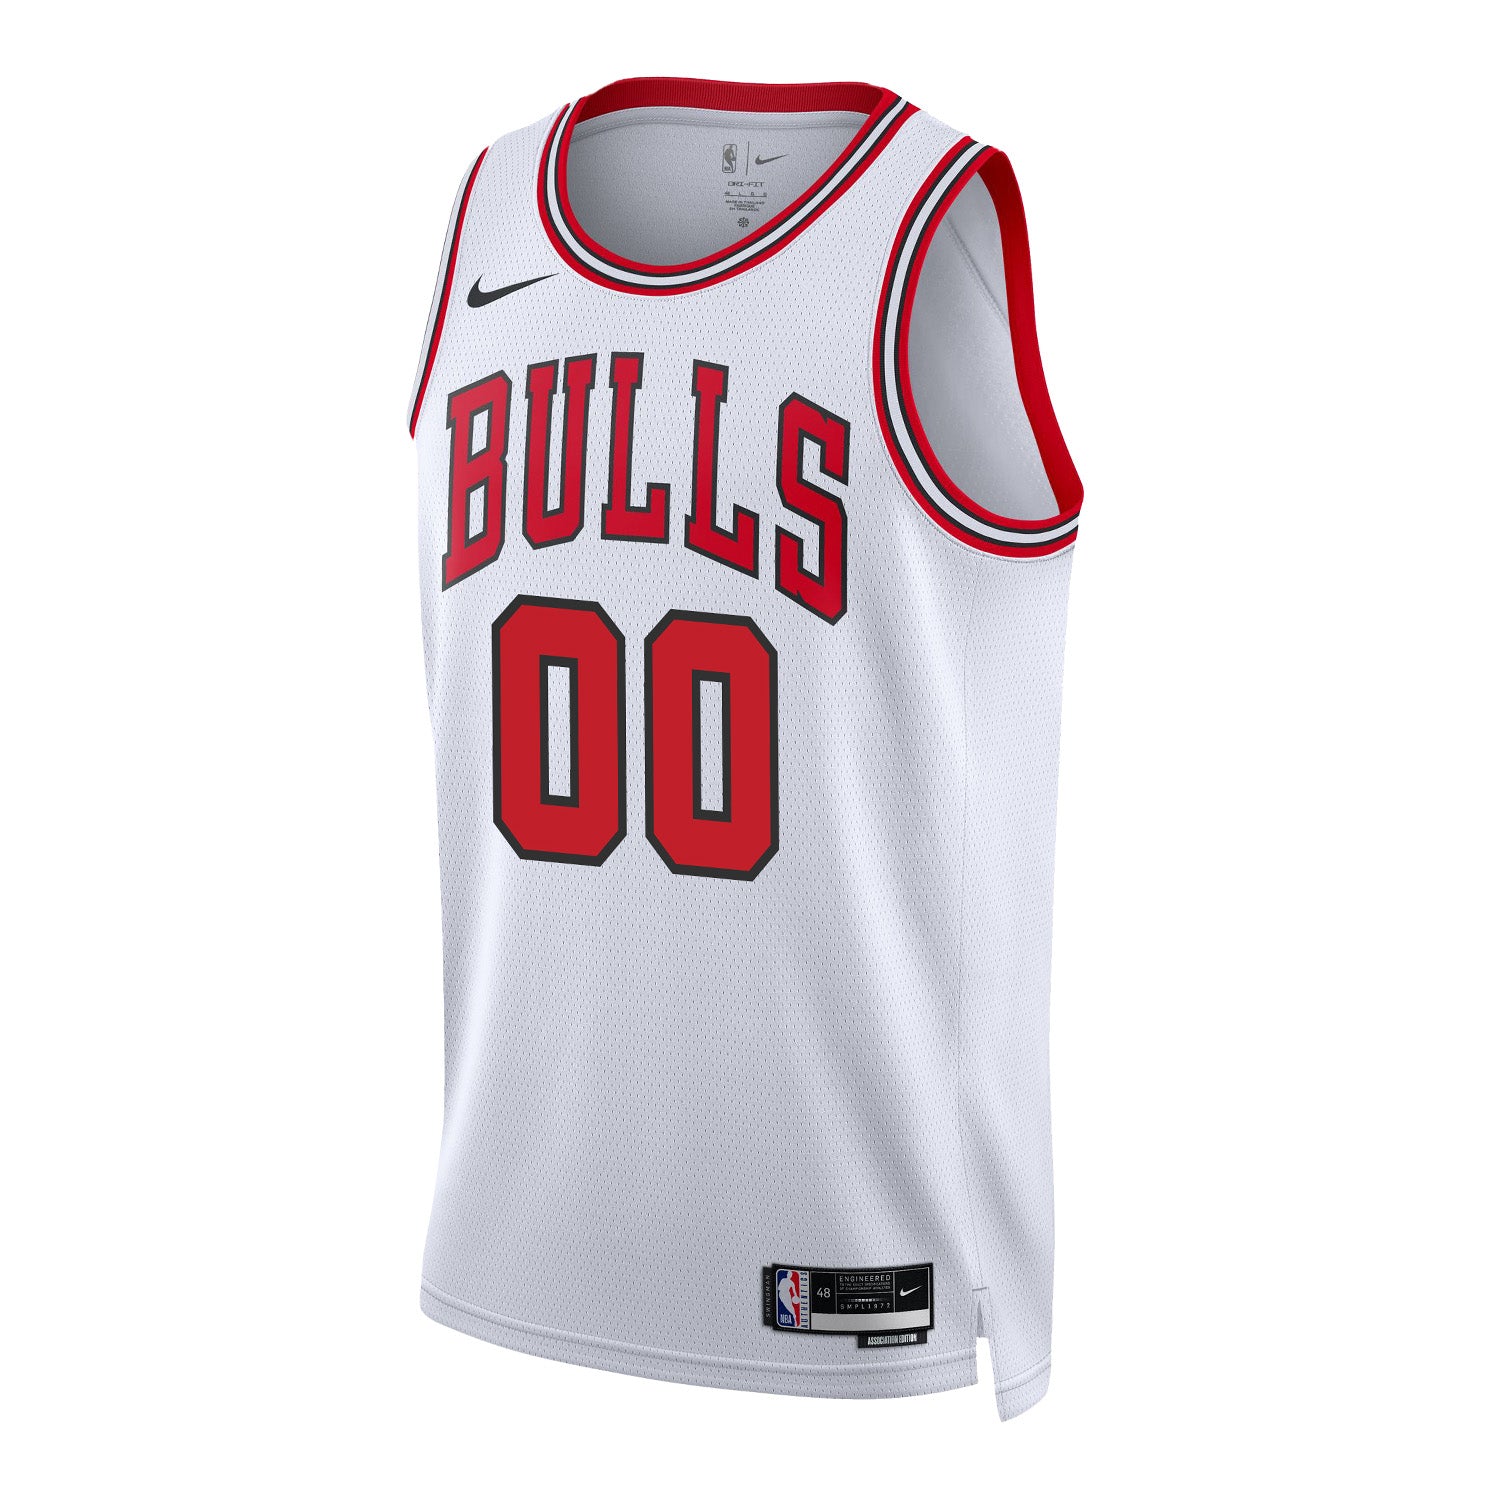 custom bulls 23 jersey